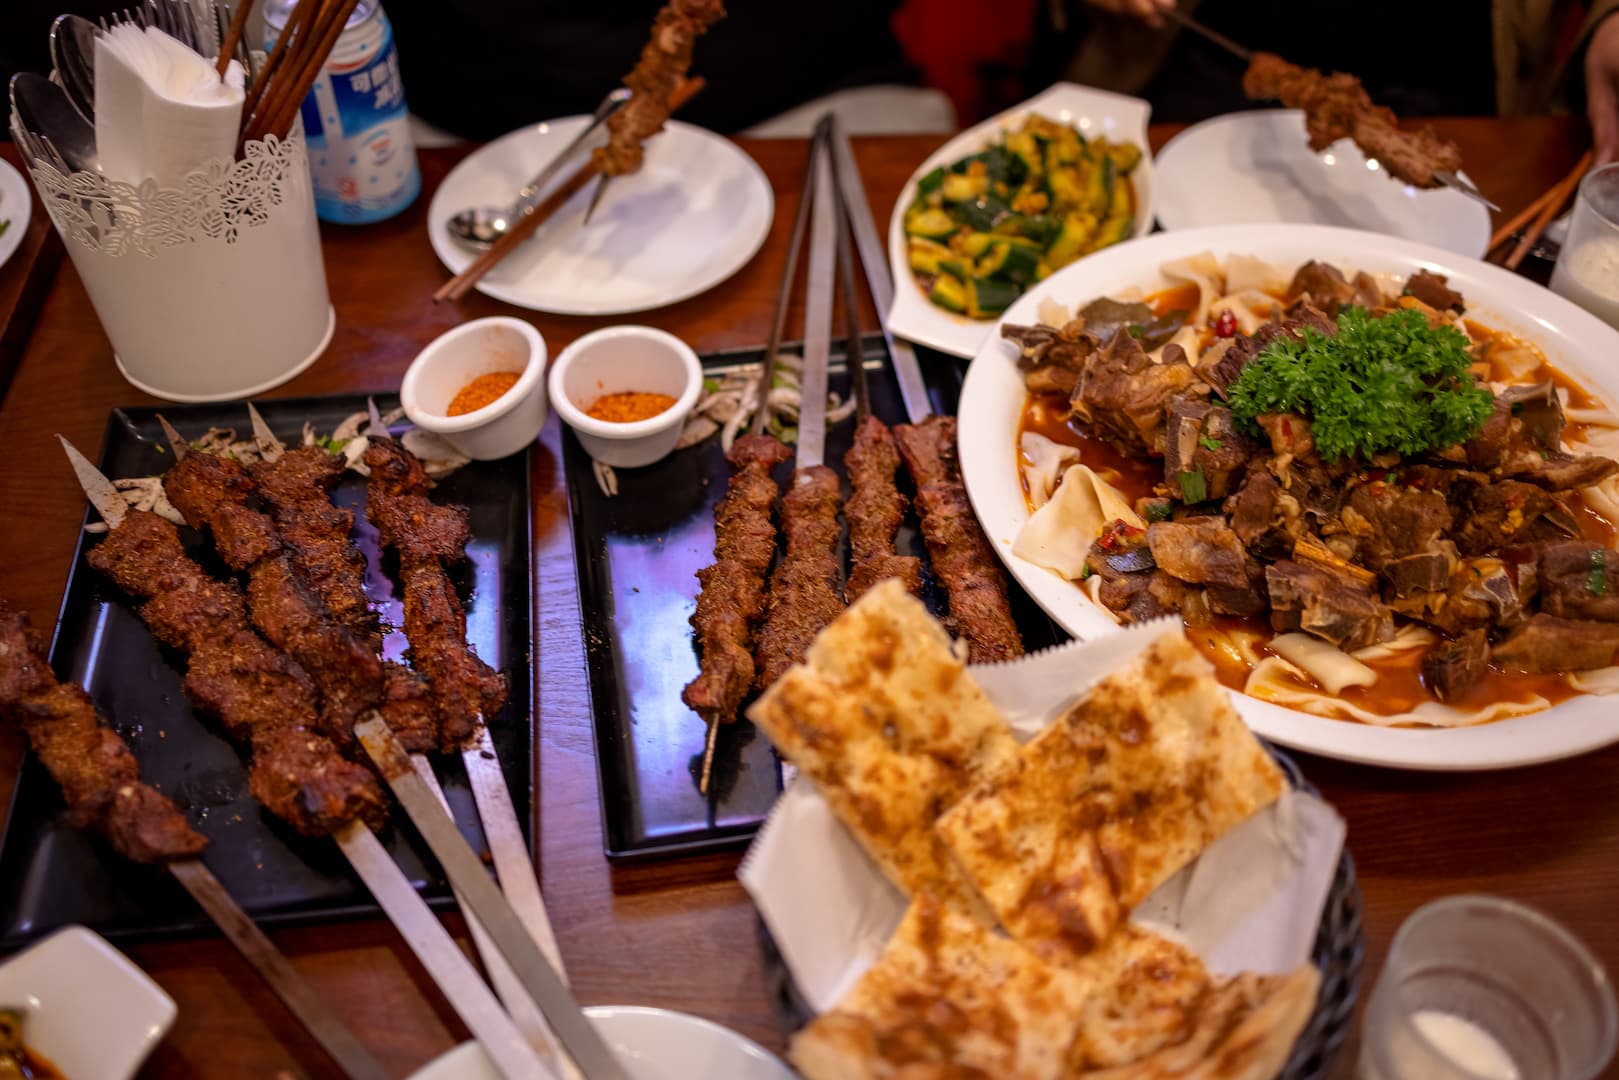 Apandim spread shot - Foodieadam: Experiencing Apandim Uyghur Cuisine